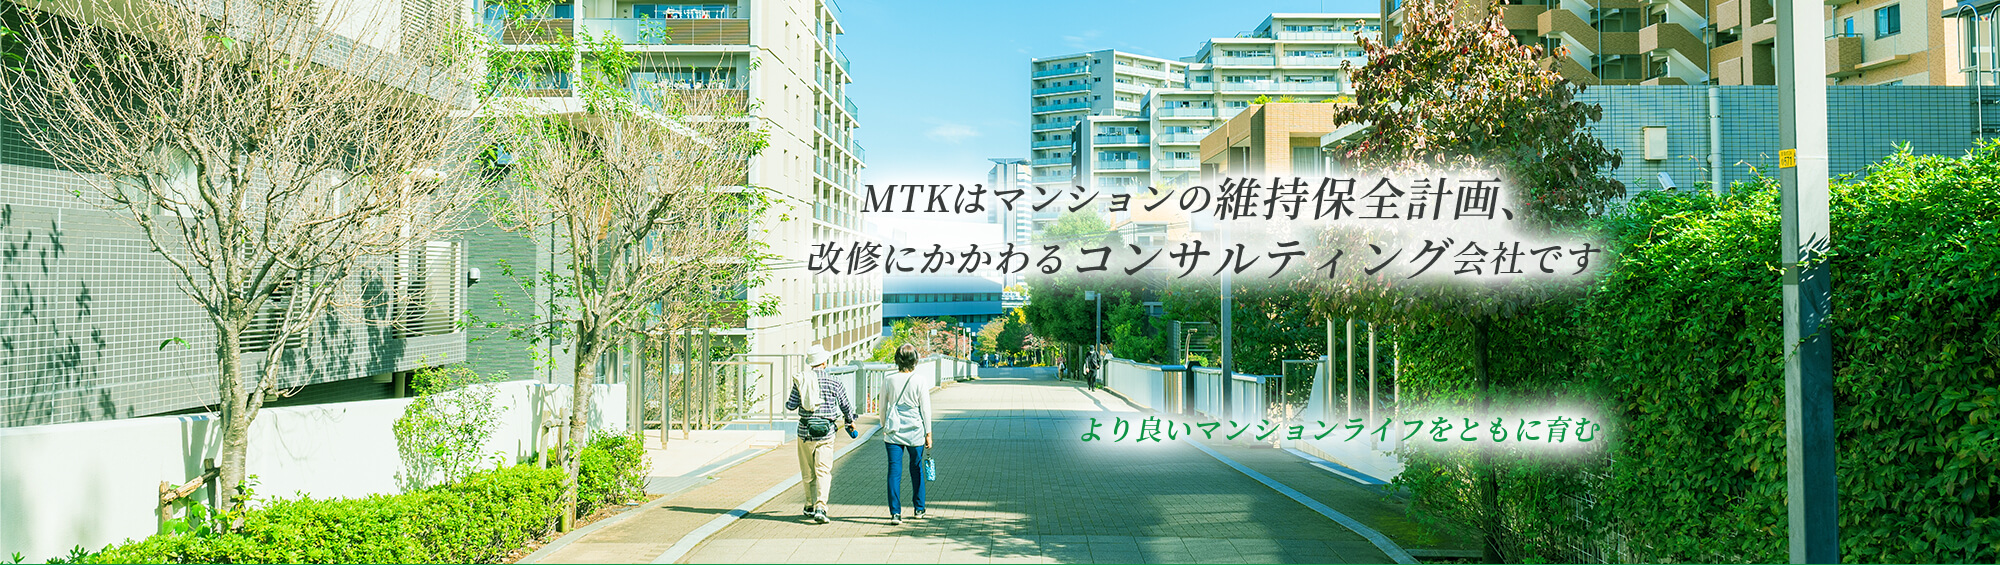 MTKはマンションの維持保全計画、 改修に関わるコンサルティング会社です